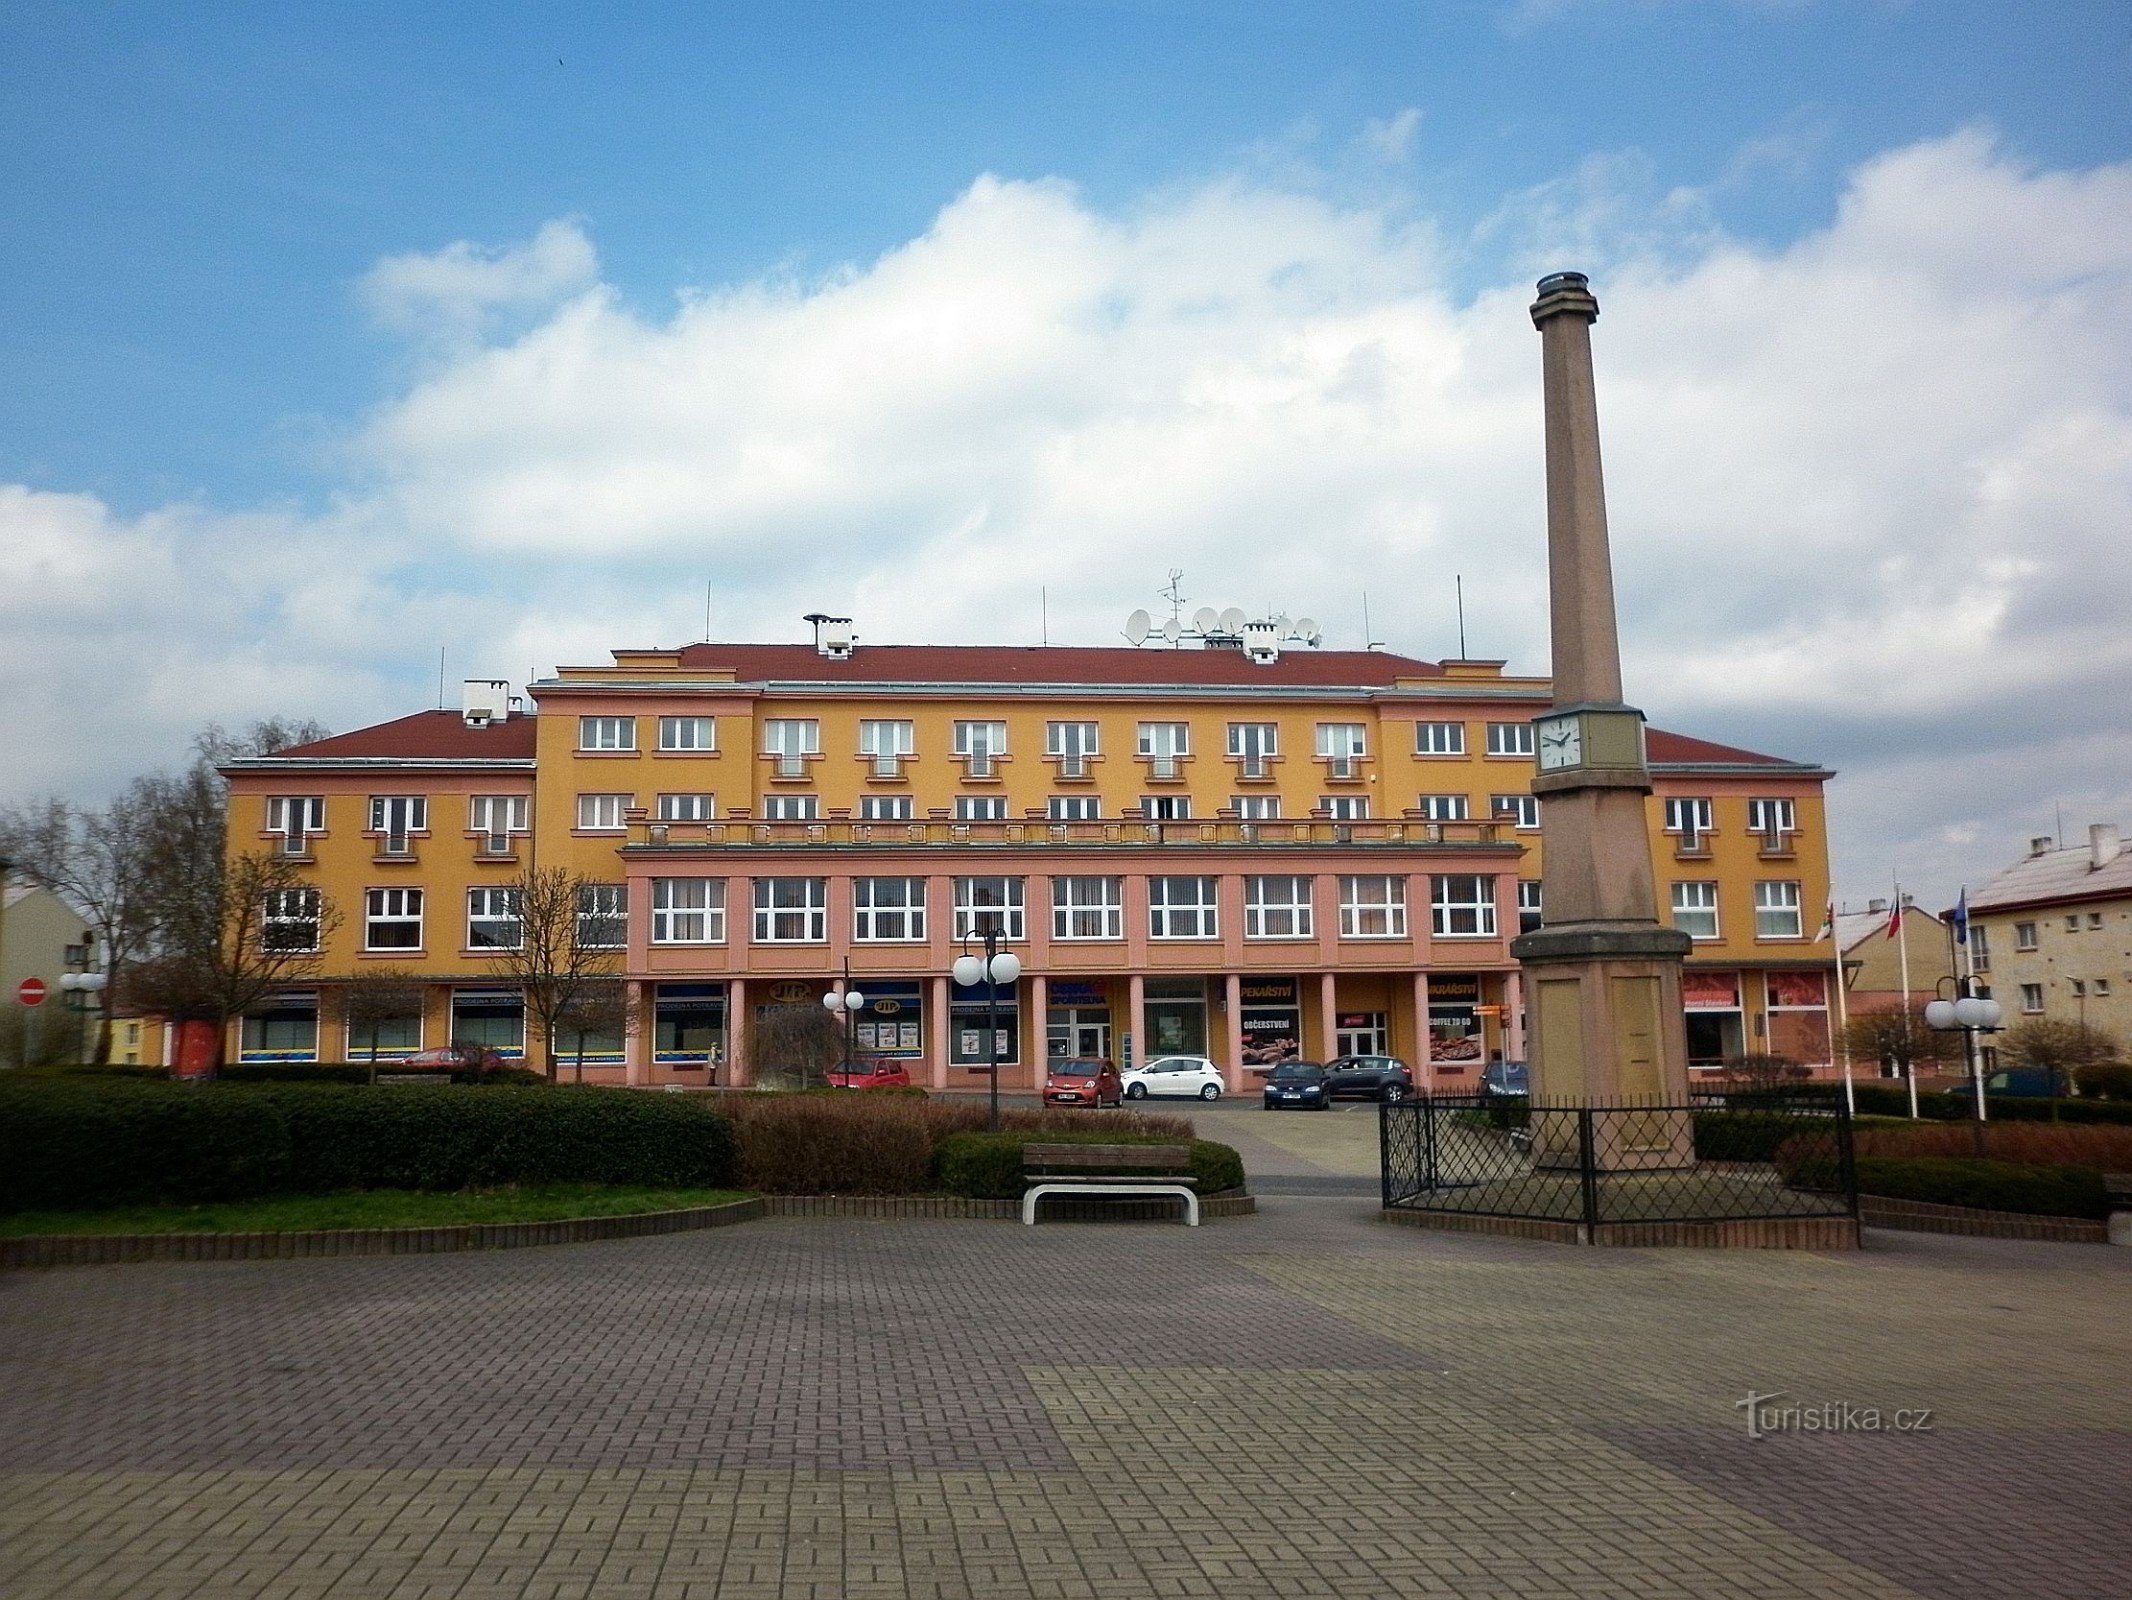 Horní Slavkov, hình vuông